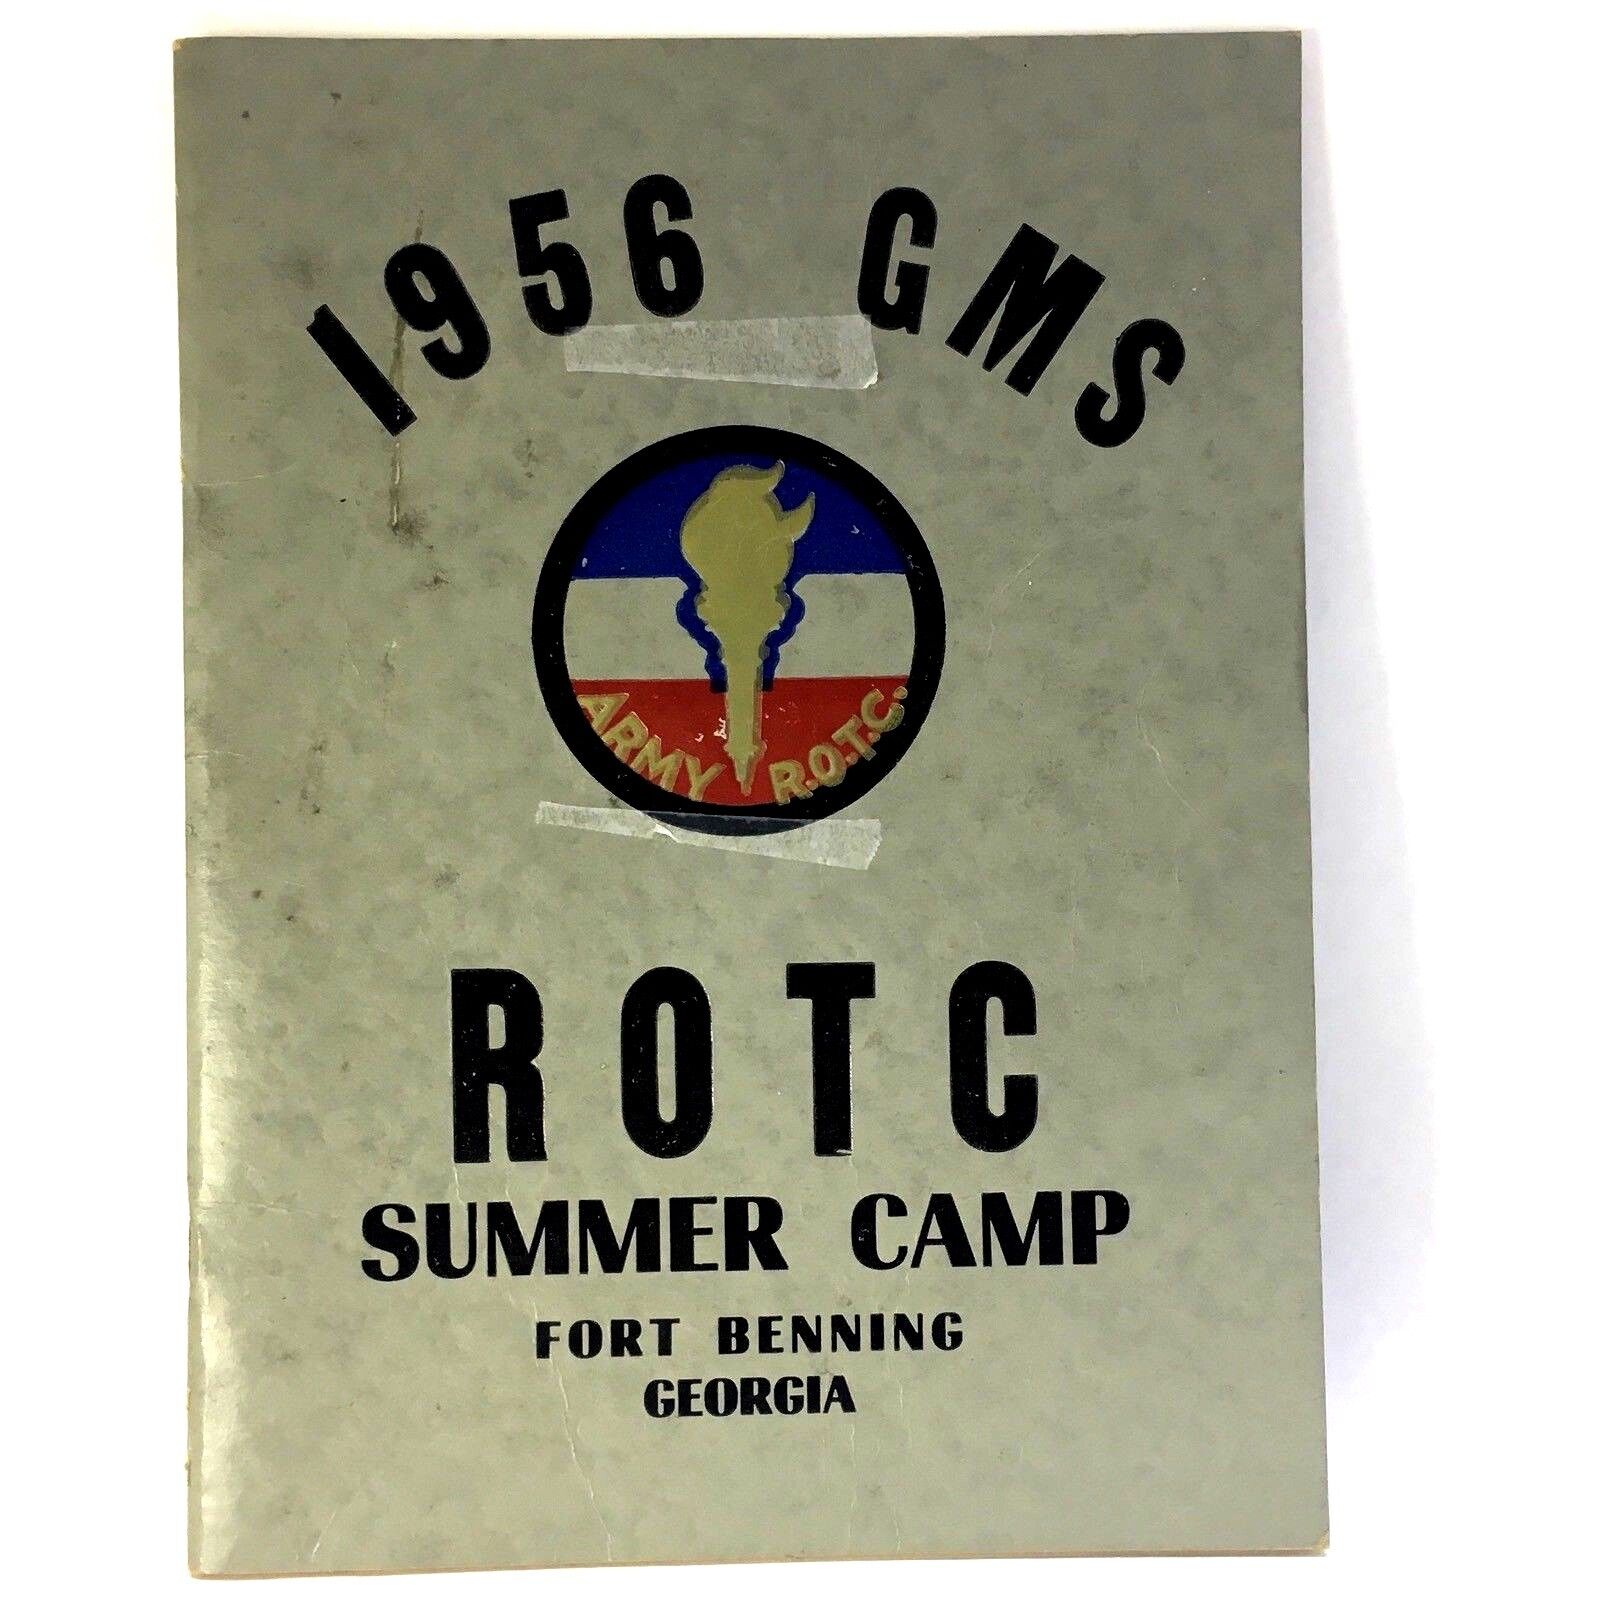 1956 GMS ROTC Summer Camp Fort Benning Georgia Photo Memorabilia Book